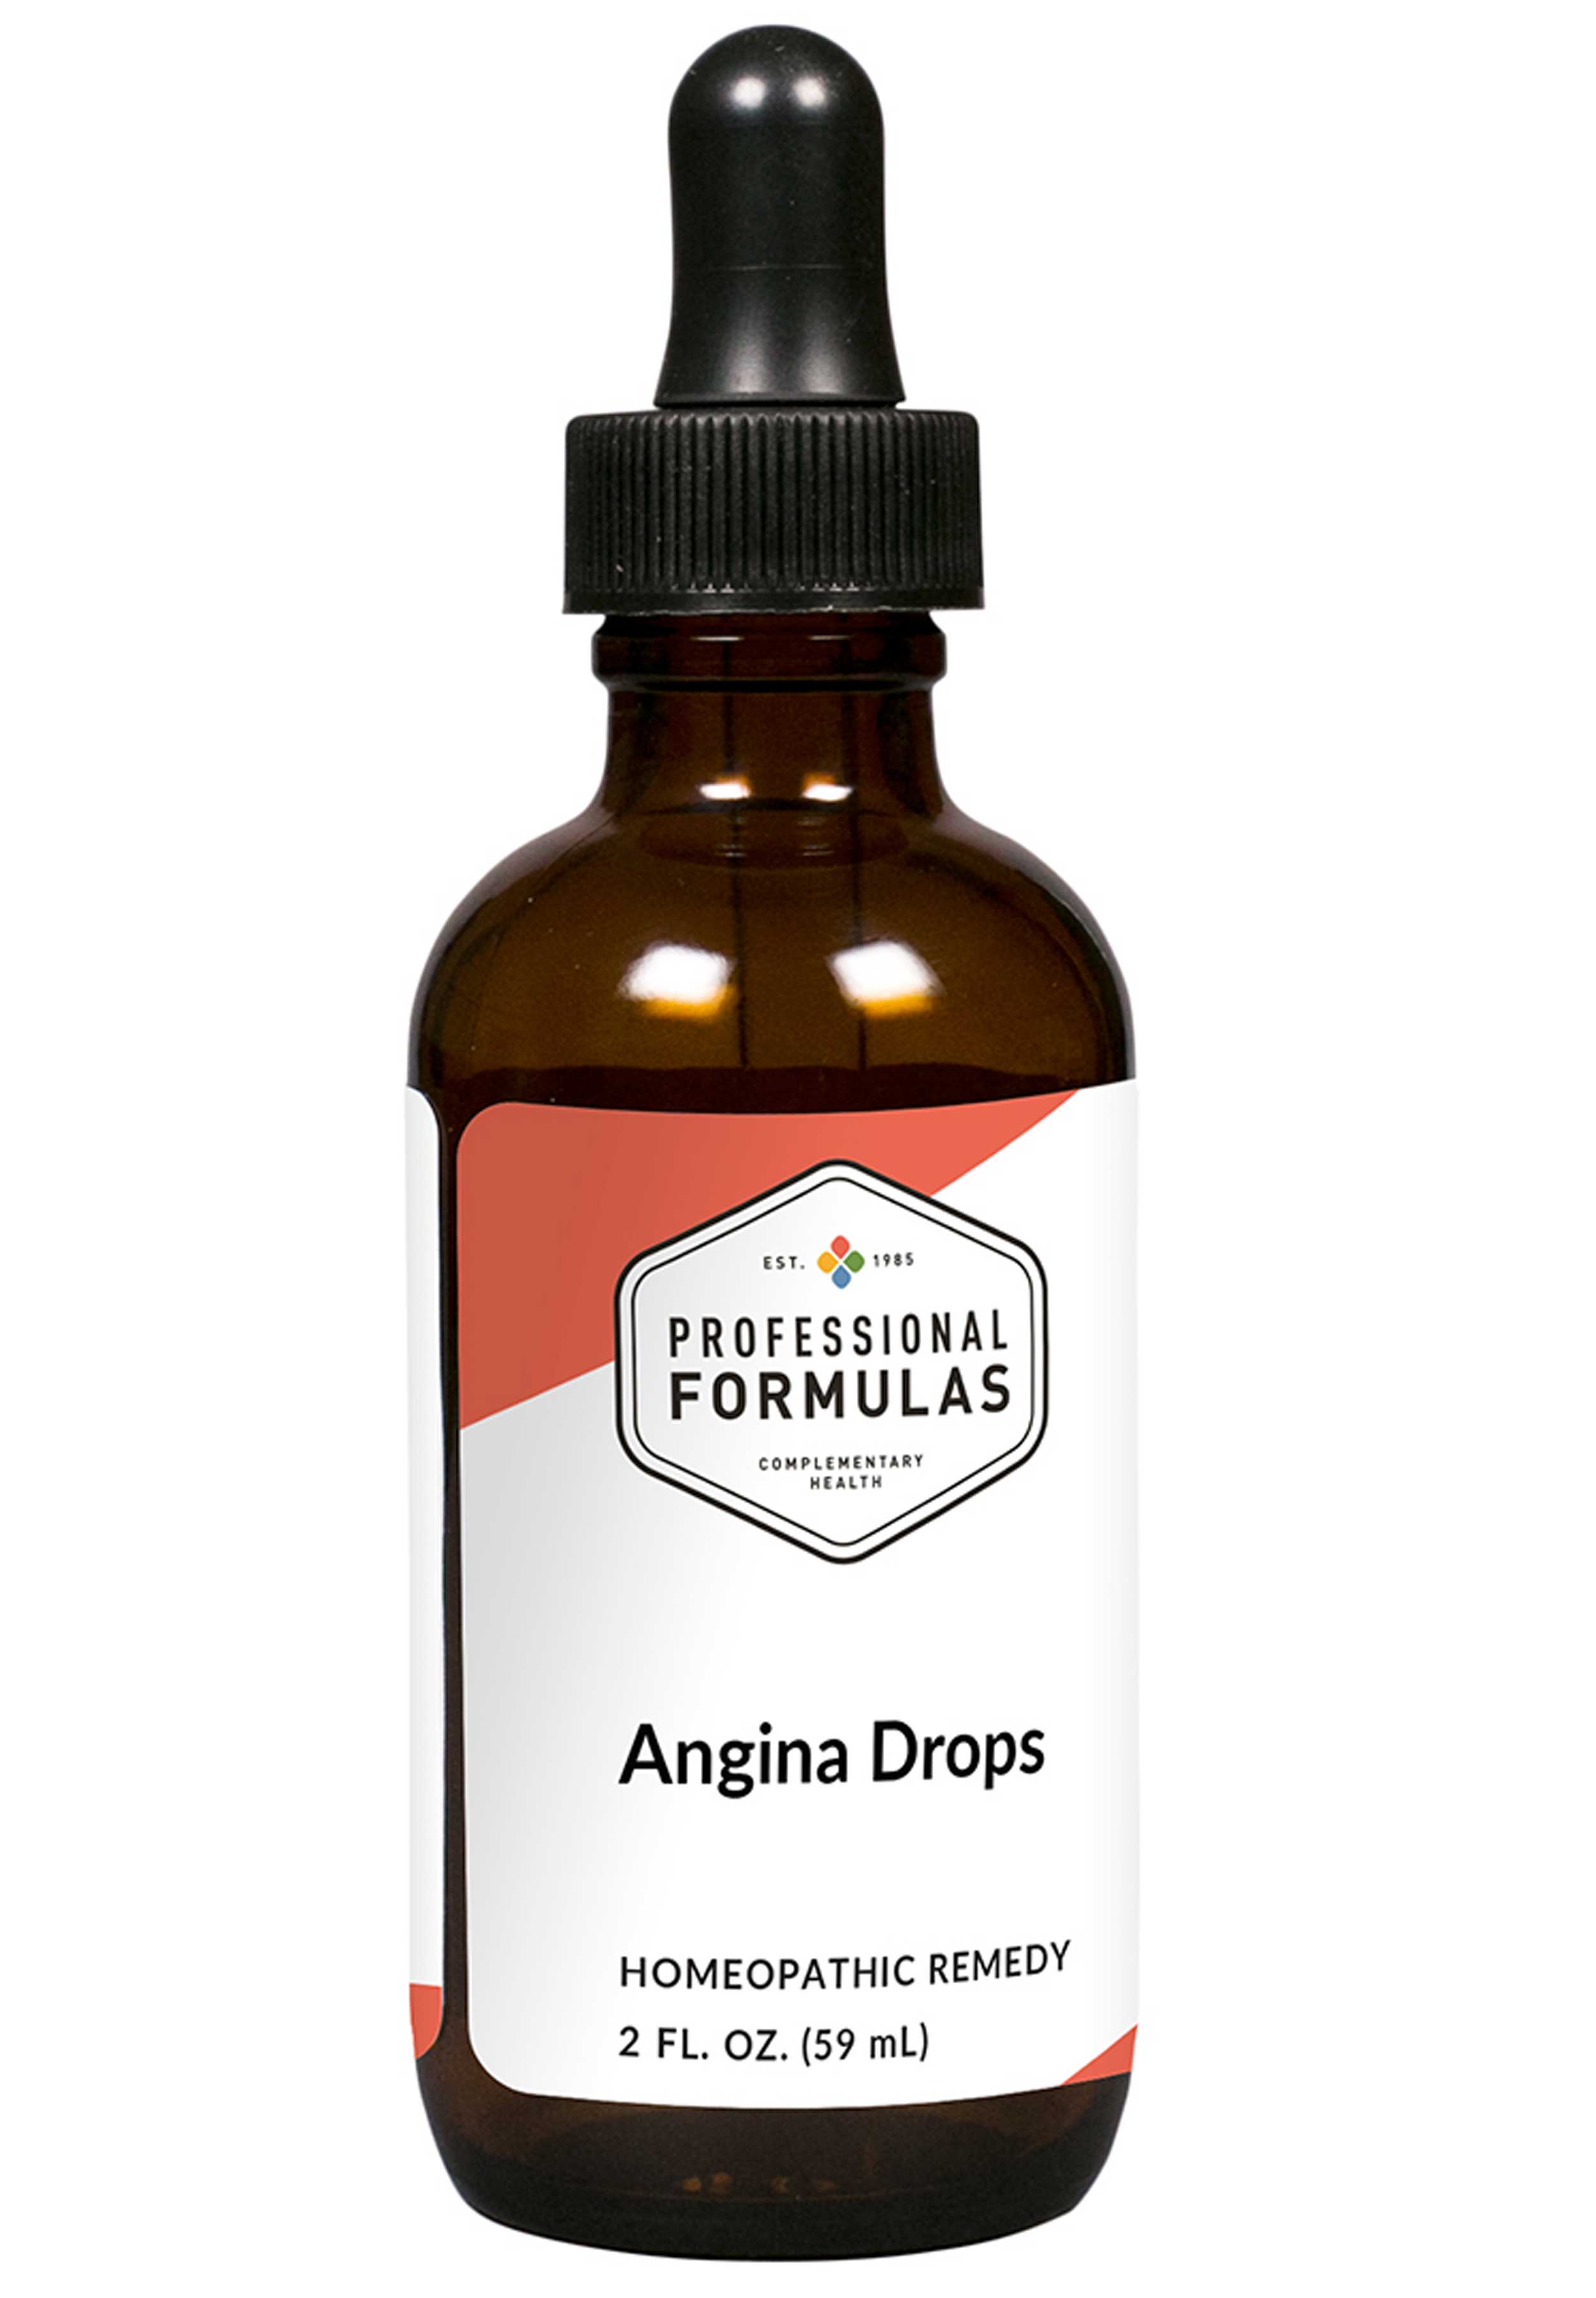 Professional Formulas Angina Drops